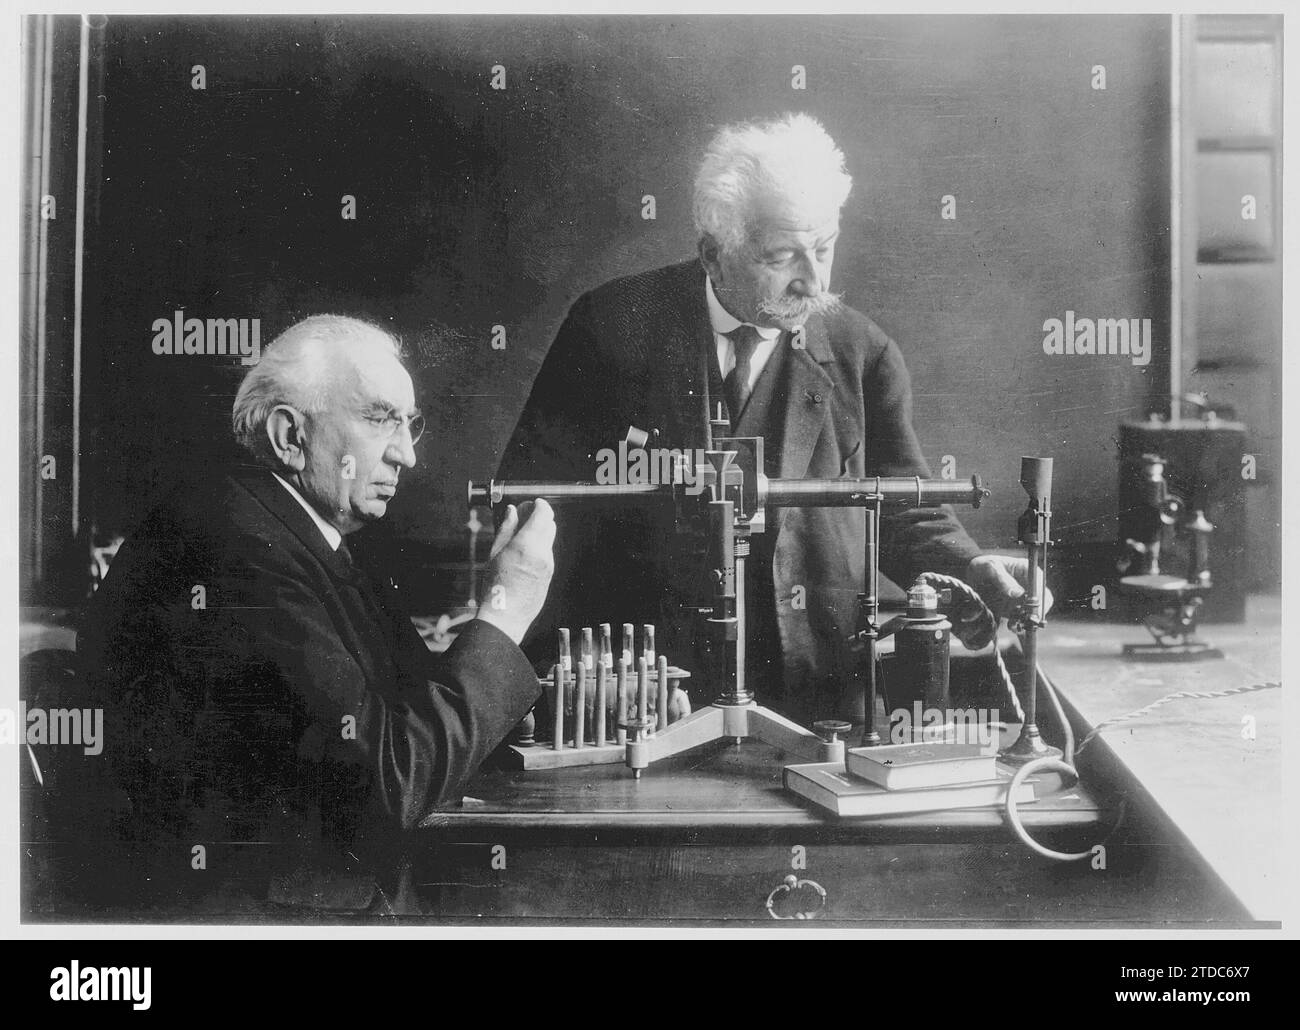 12/31/1929. Die Lumière-Brüder in ihrem Labor. Links Louis, rechts Auguste. Quelle: Album/Archivo ABC Stockfoto